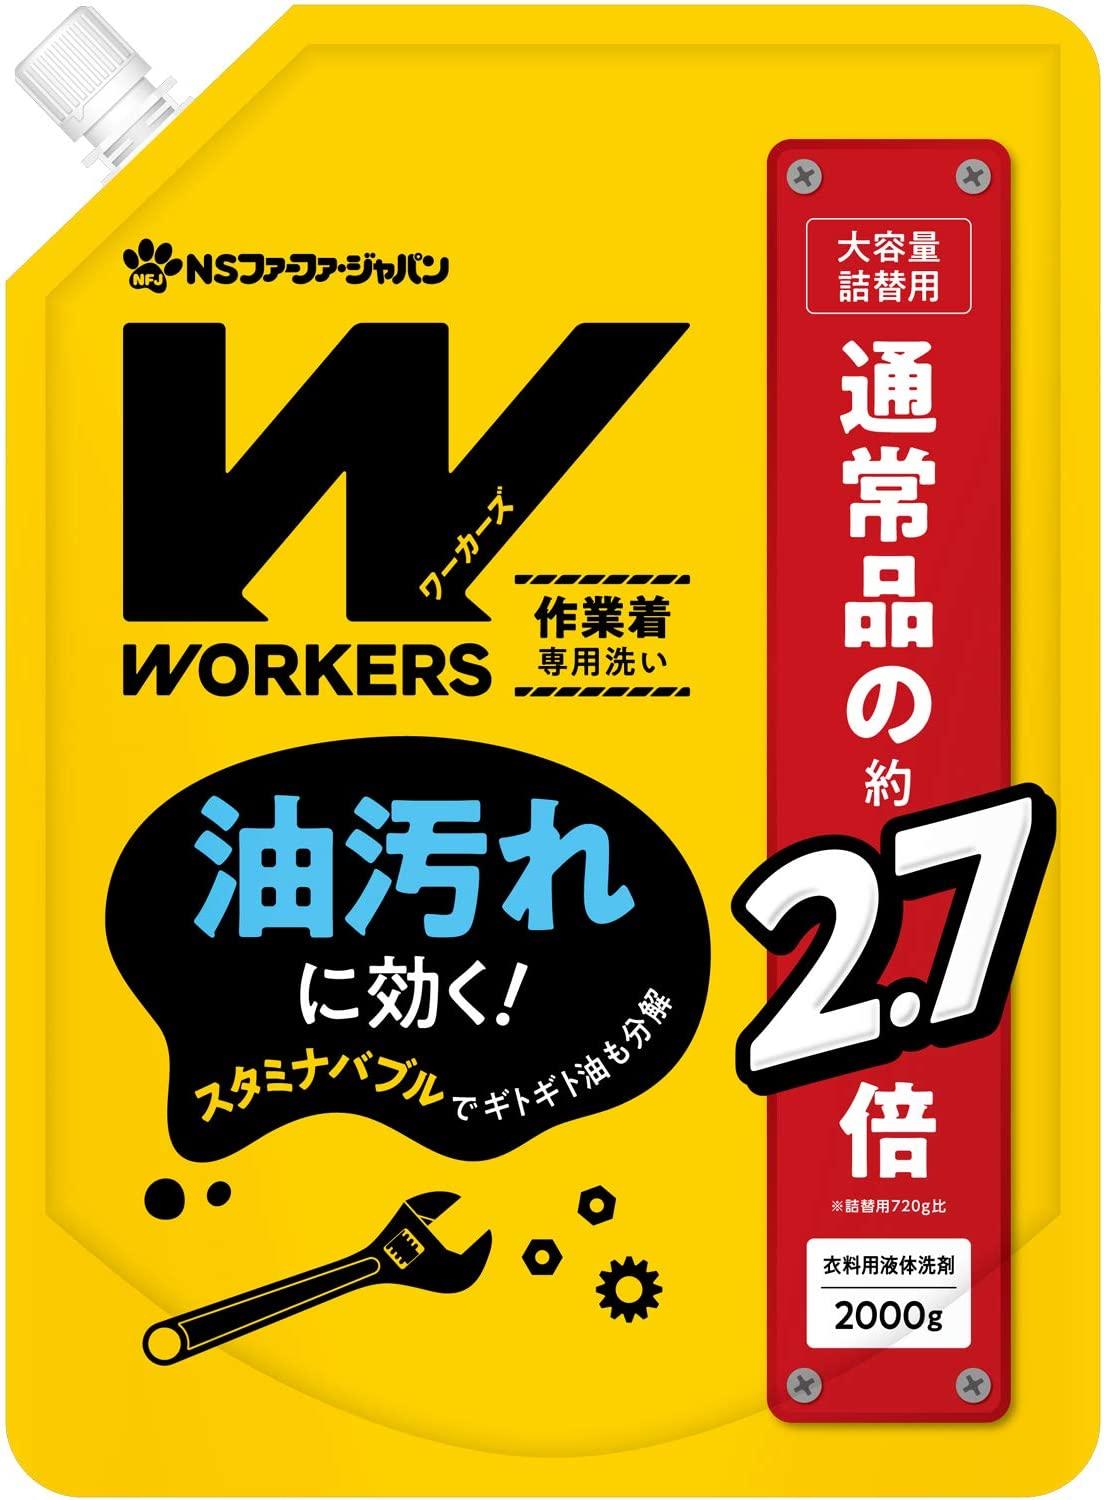 WORKERS ƒt̐ l e 2000g